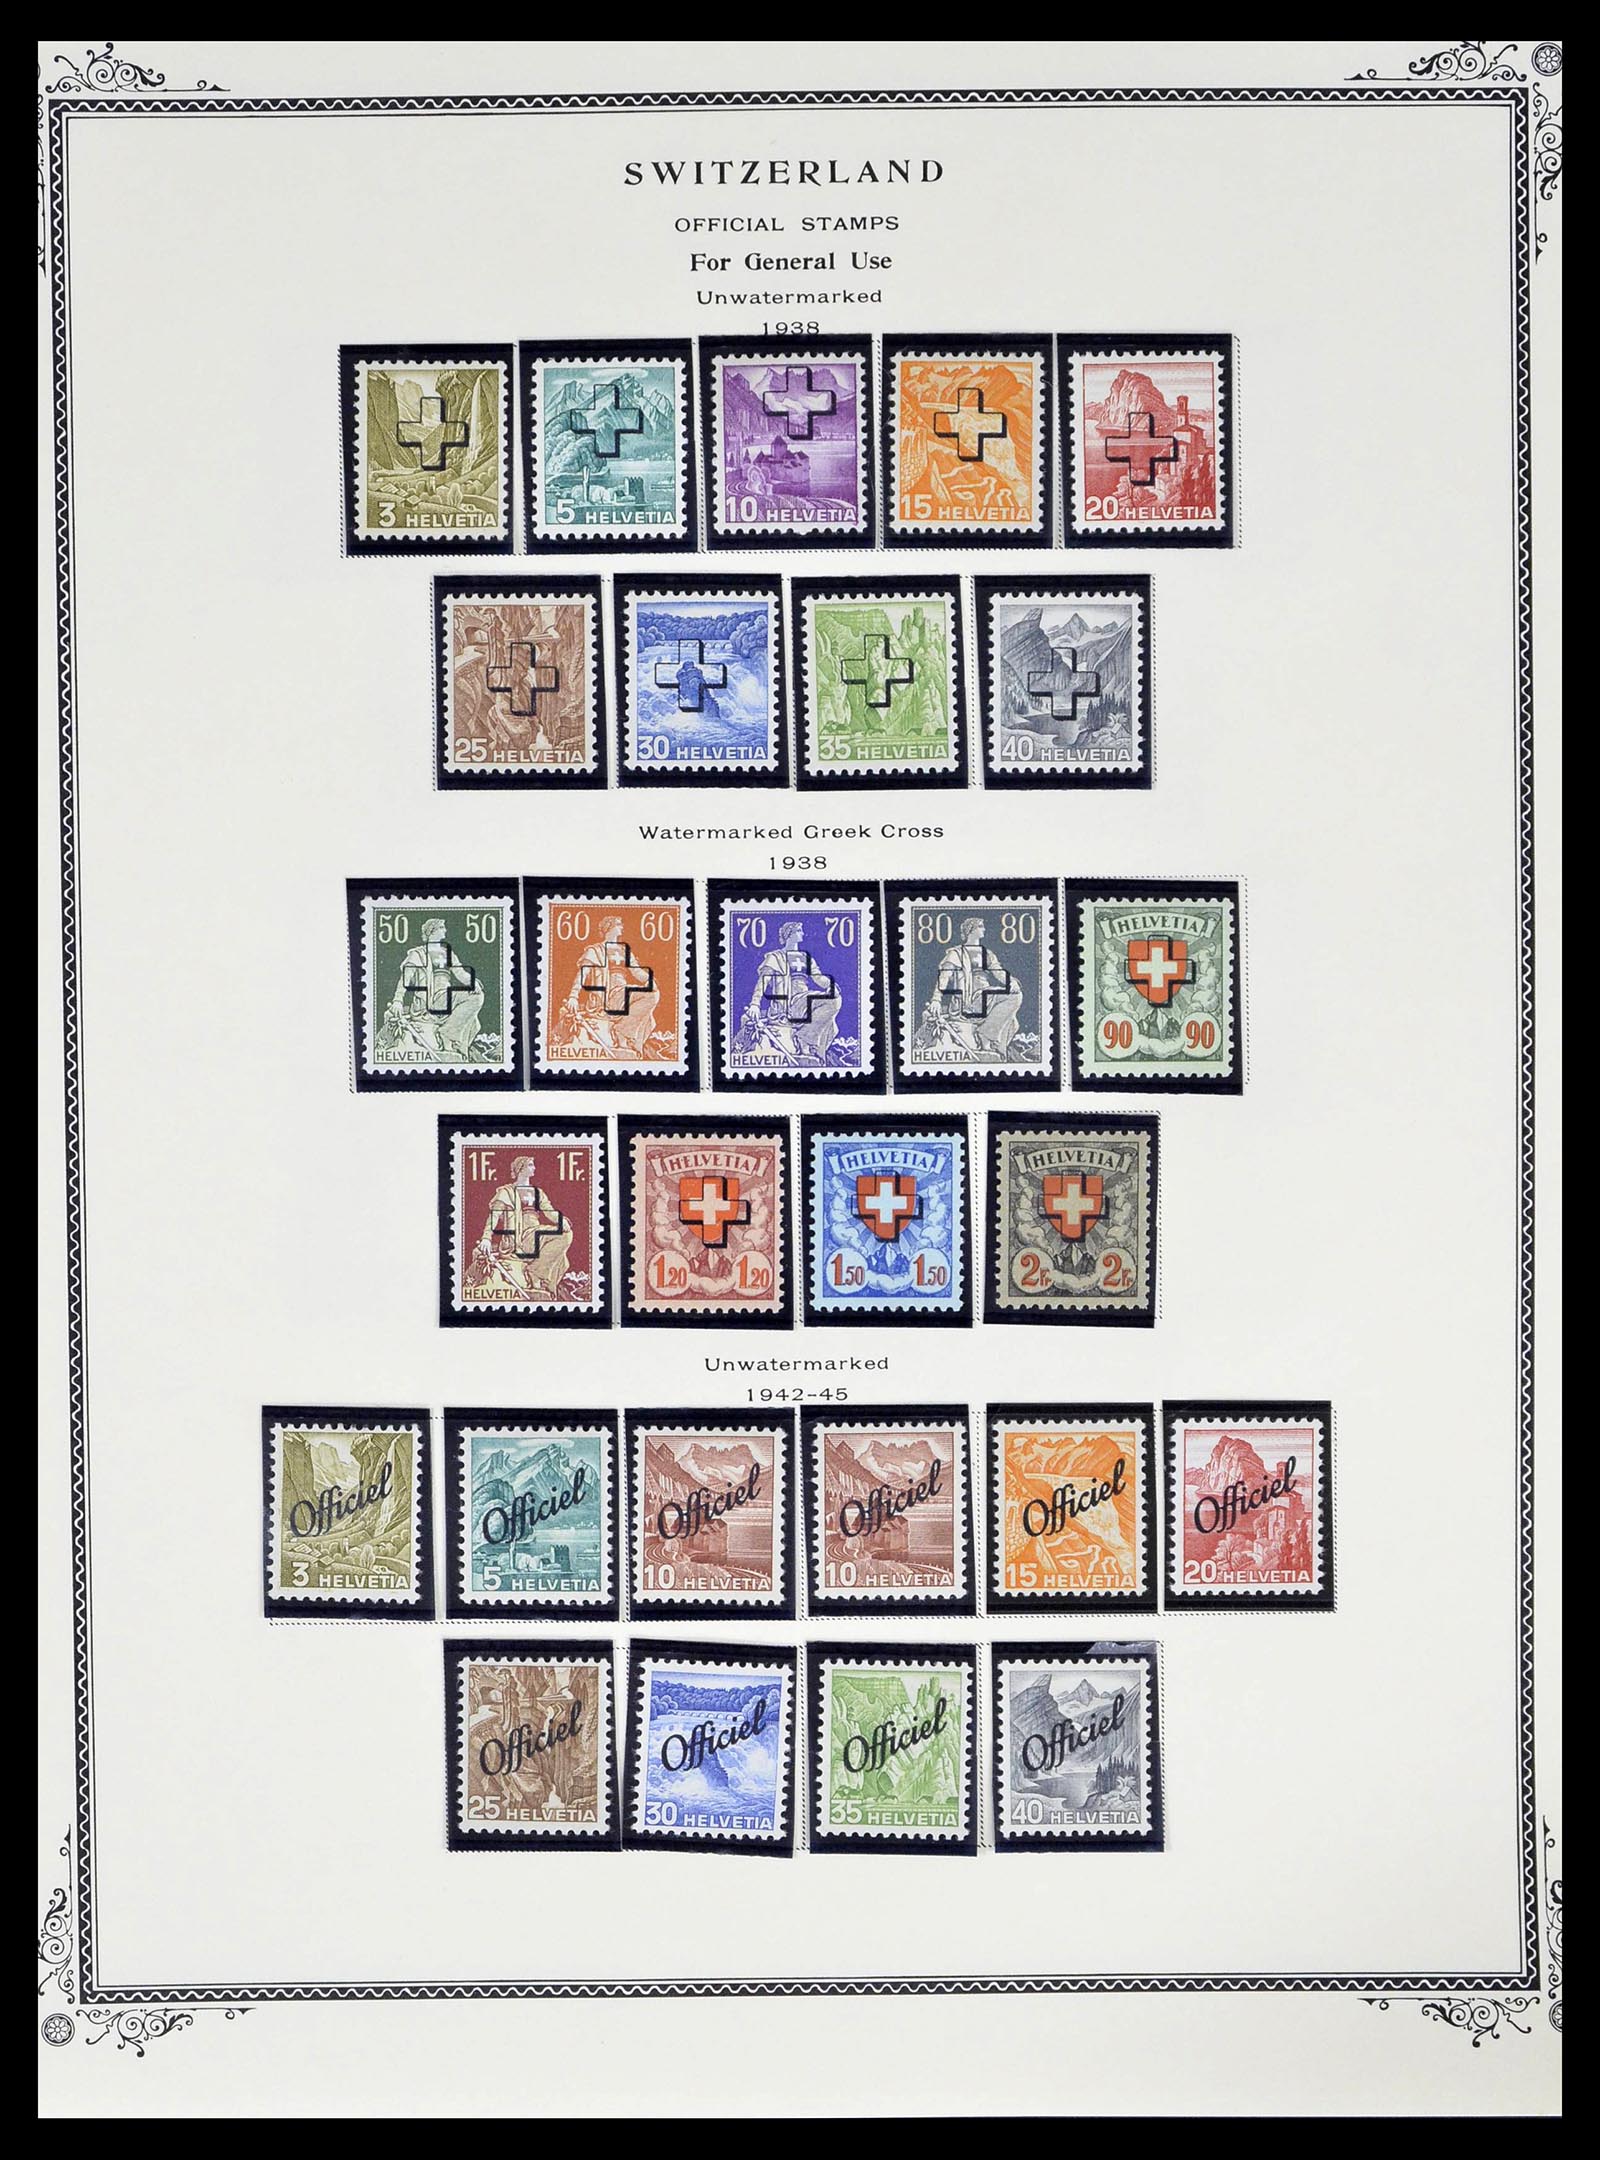 39178 0231 - Stamp collection 39178 Switzerland 1850-1989.